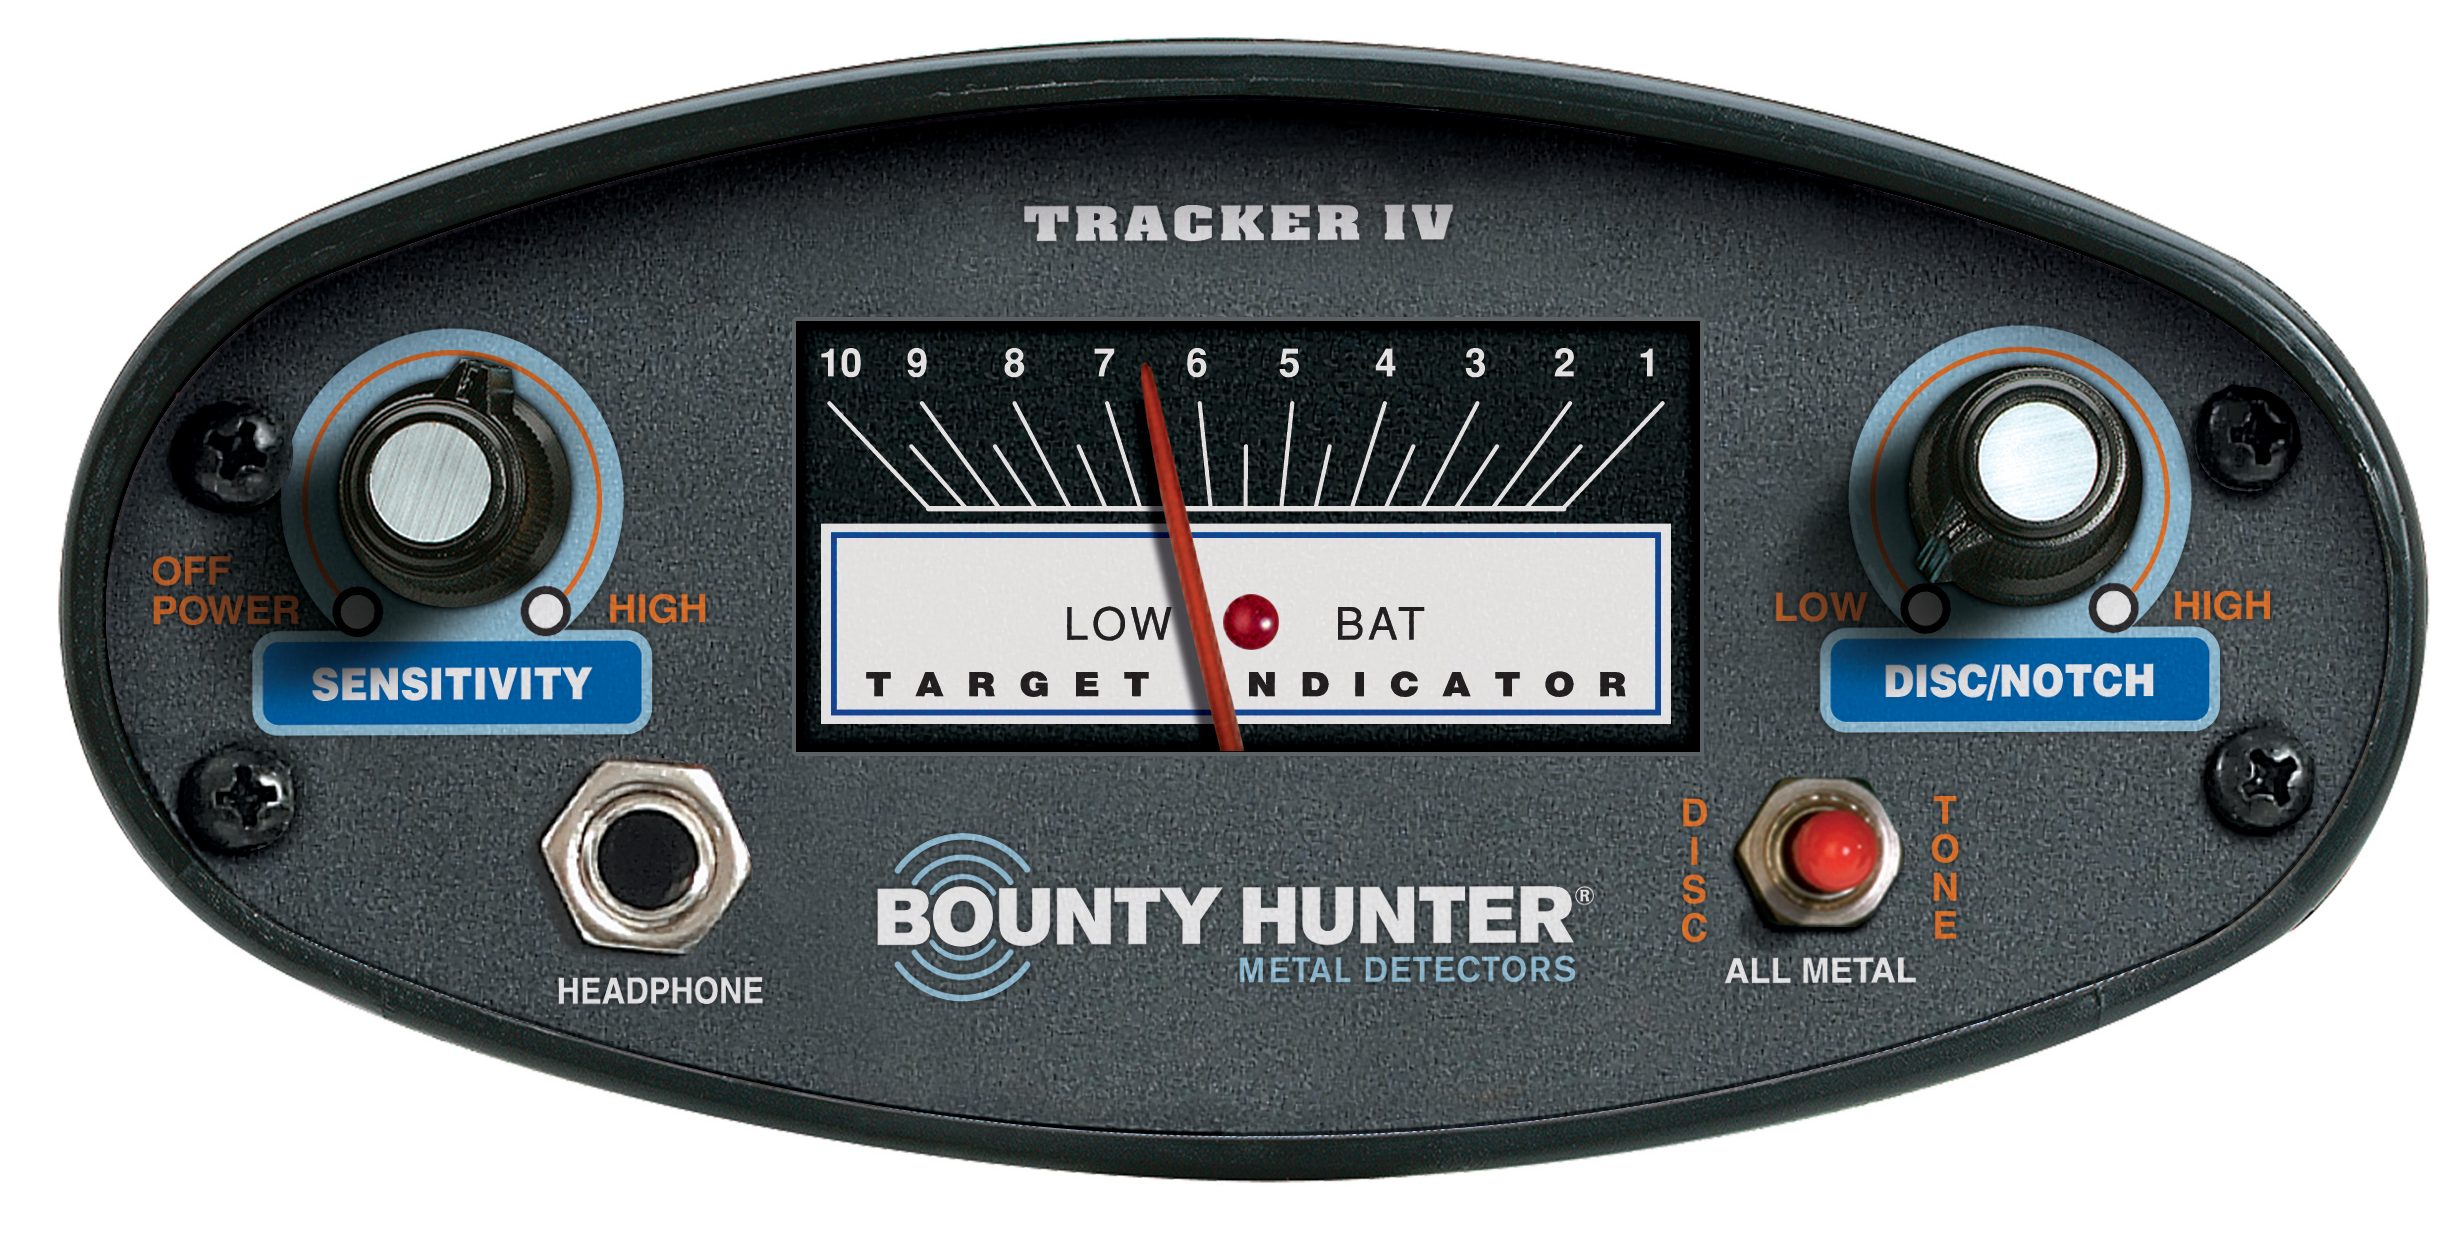 Bounty Hunter Tracker IV Metal Detector - image 2 of 4